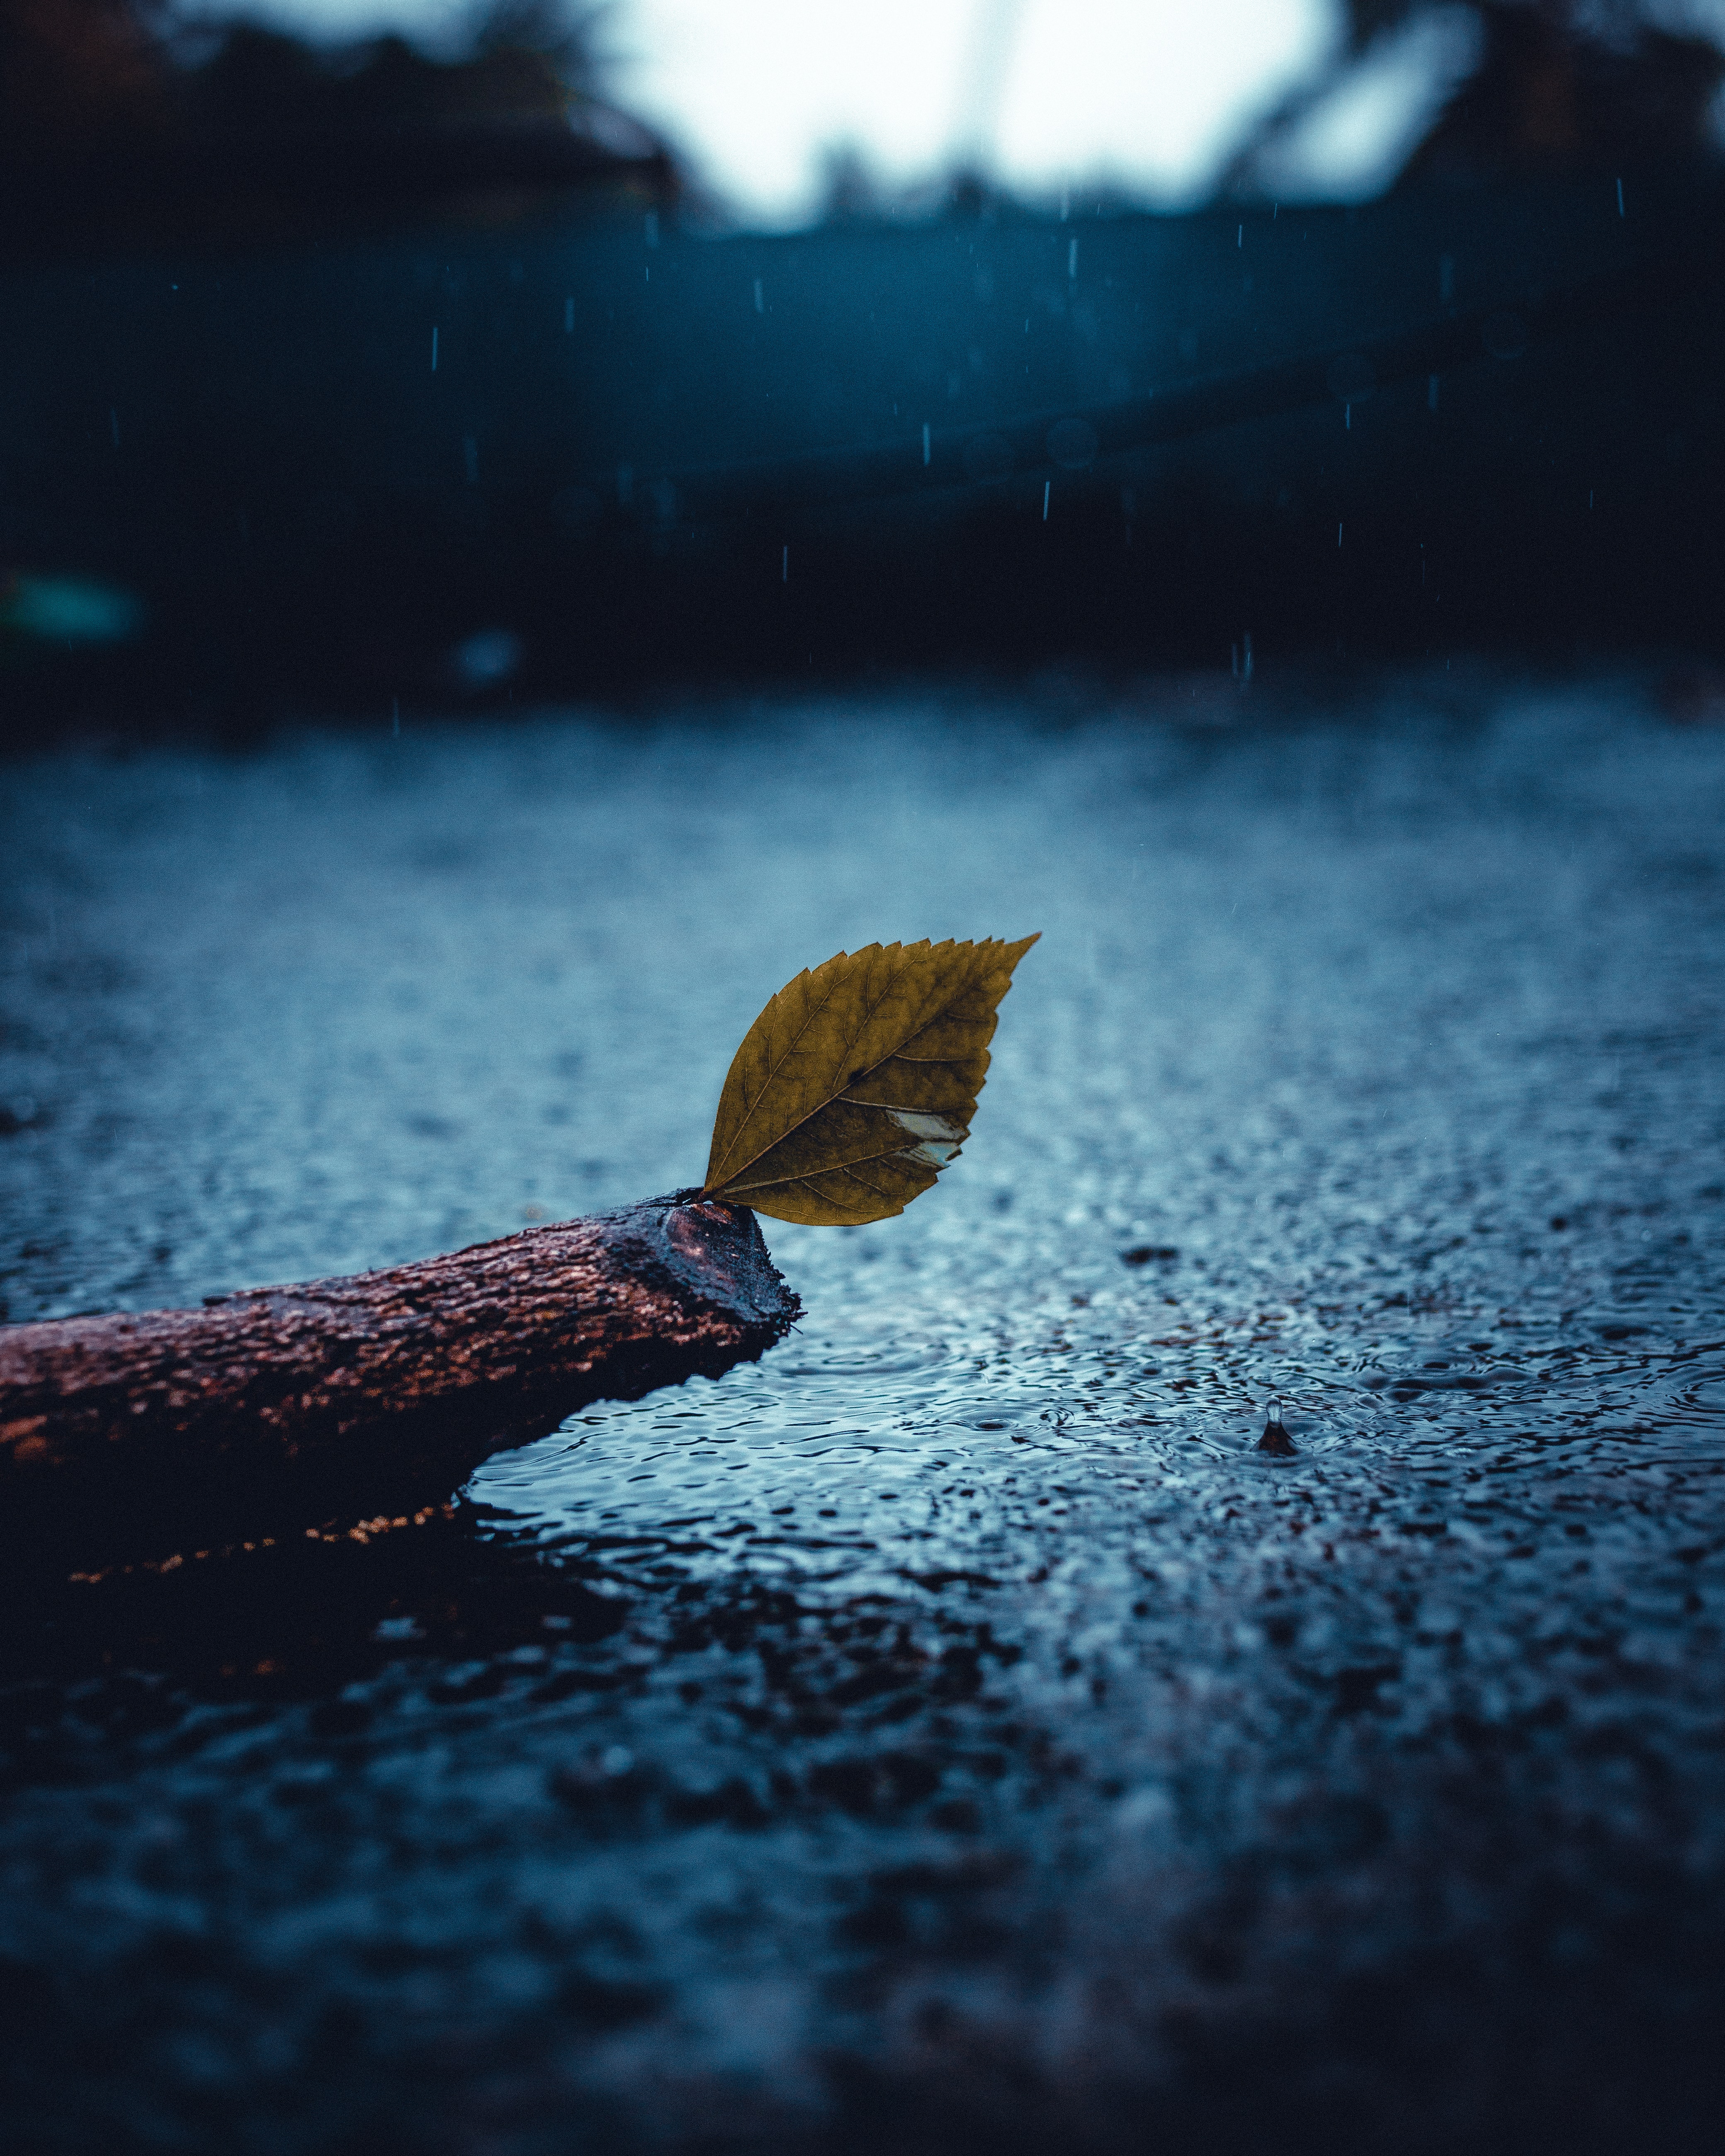 rain, sorrow, sheet, sadness, nature, leaf